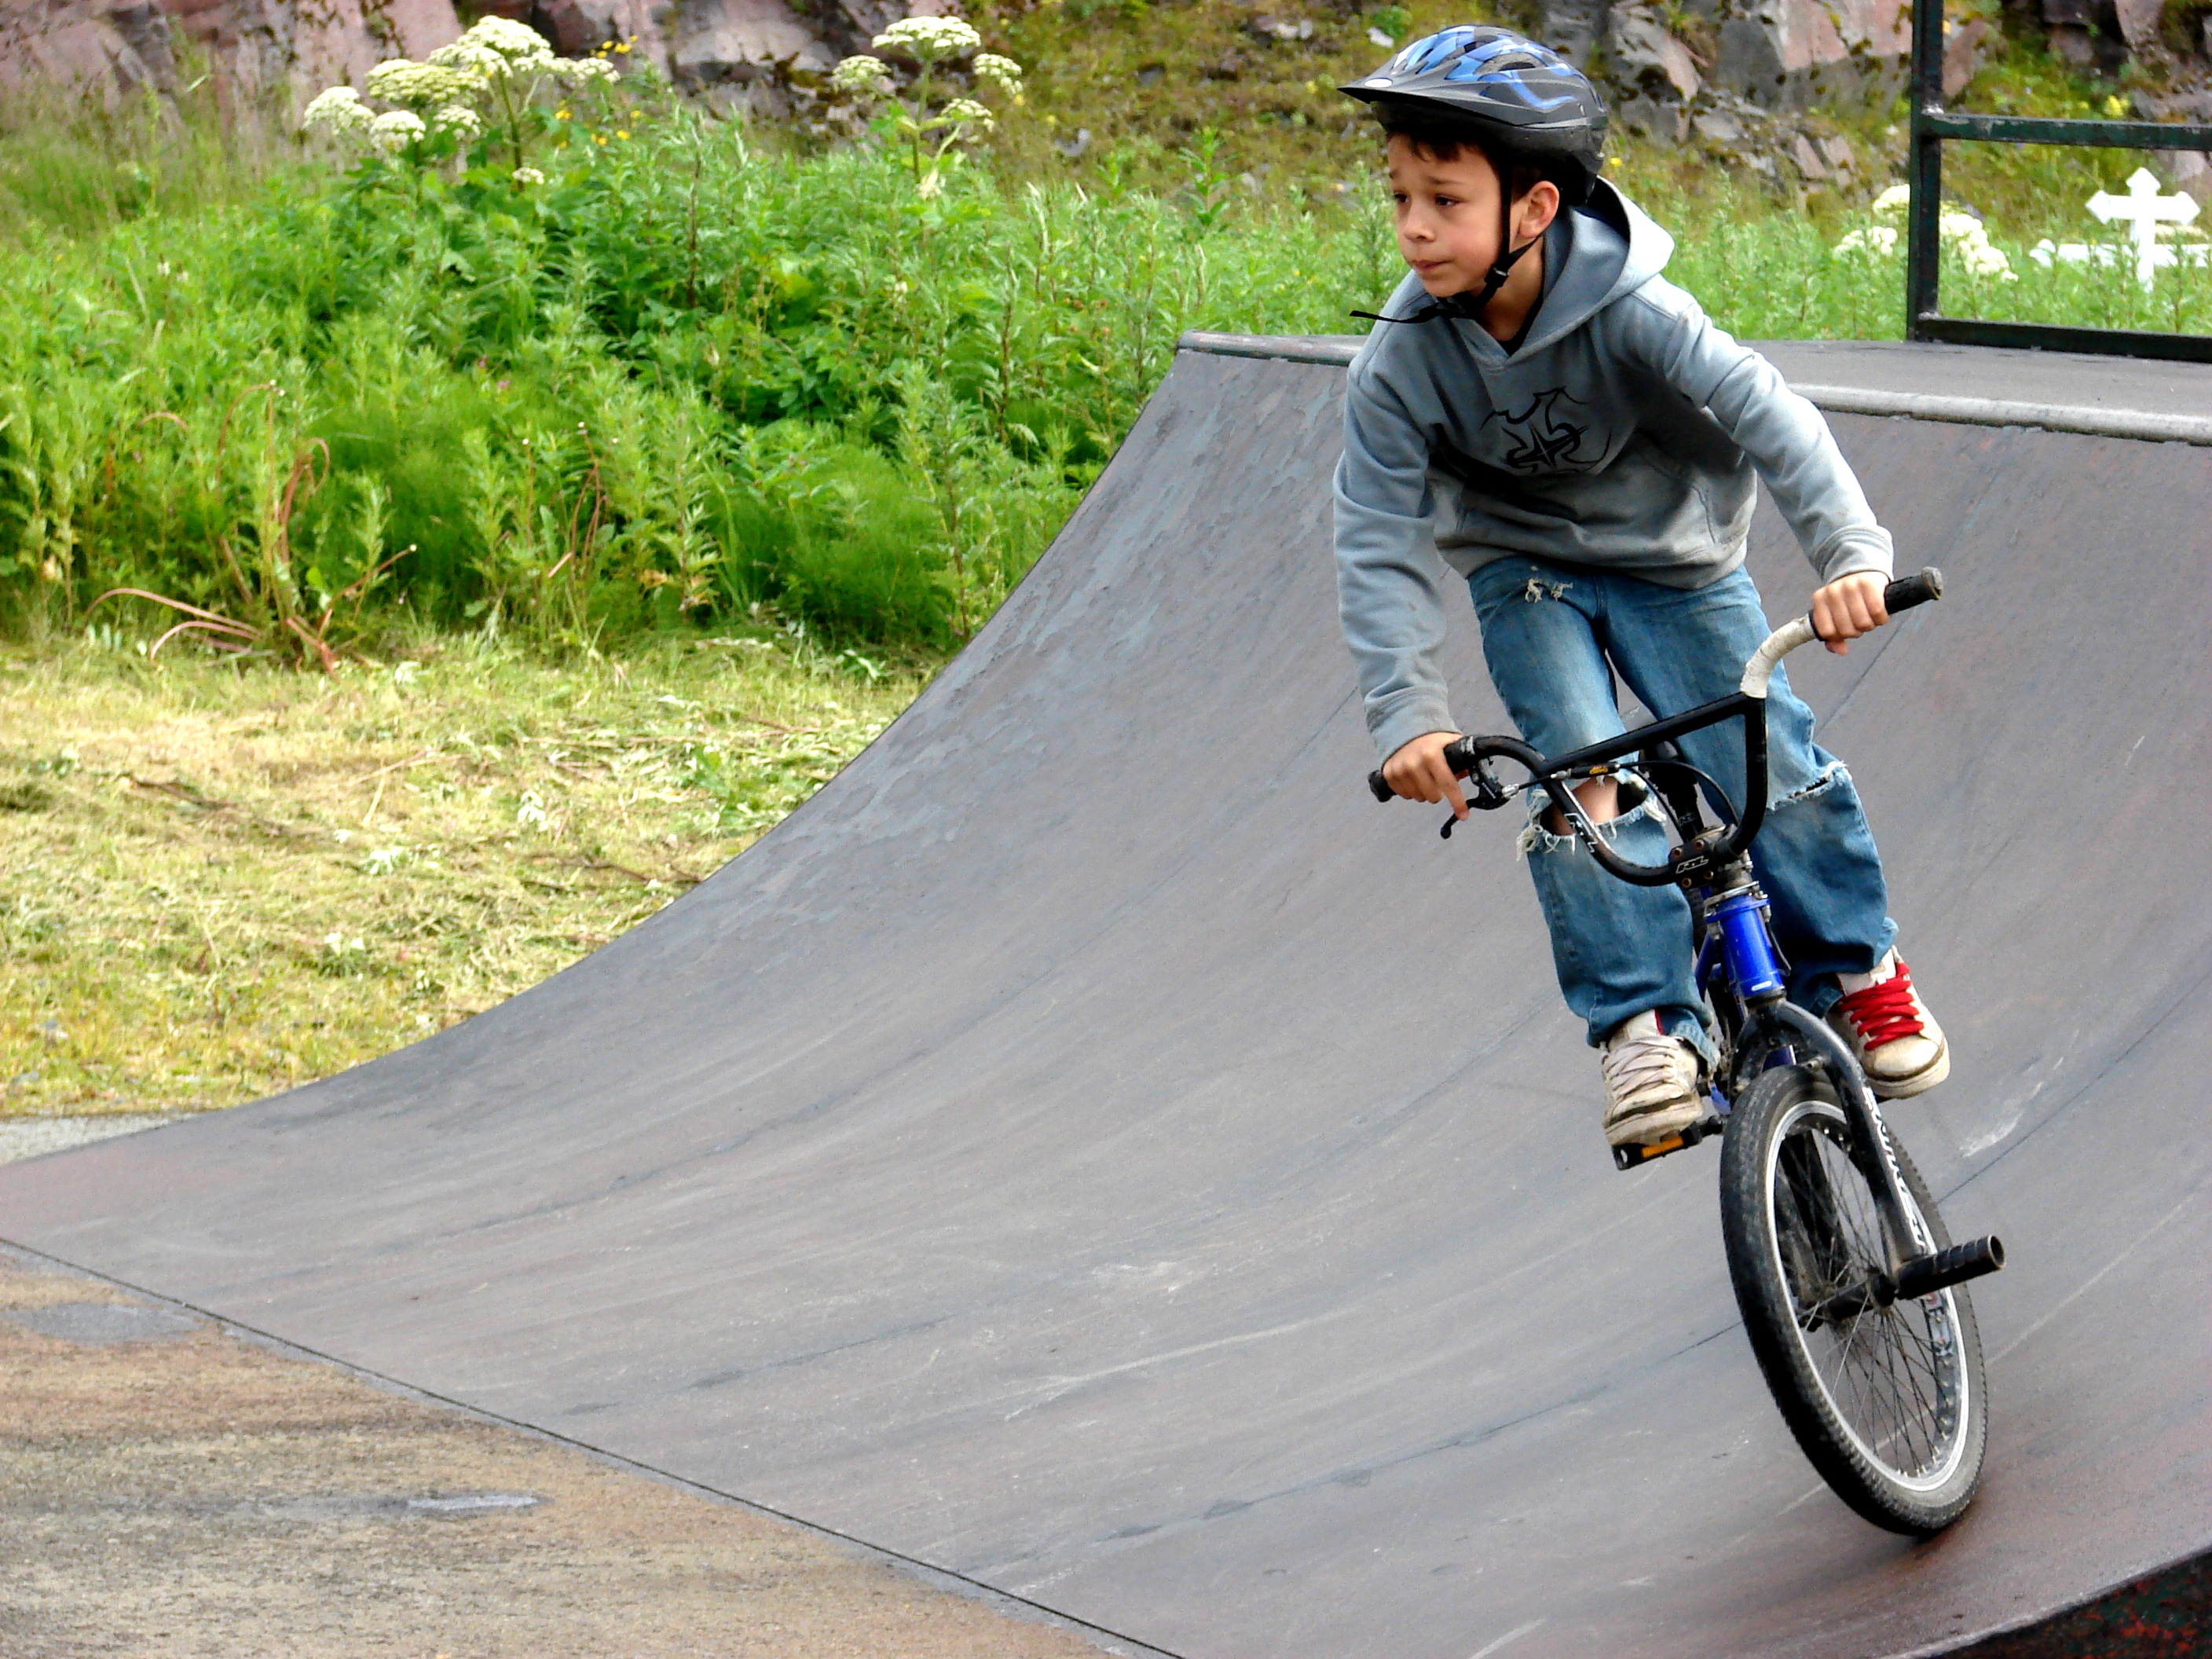 Biker at Skate Park (Photo by Albert Burnham)